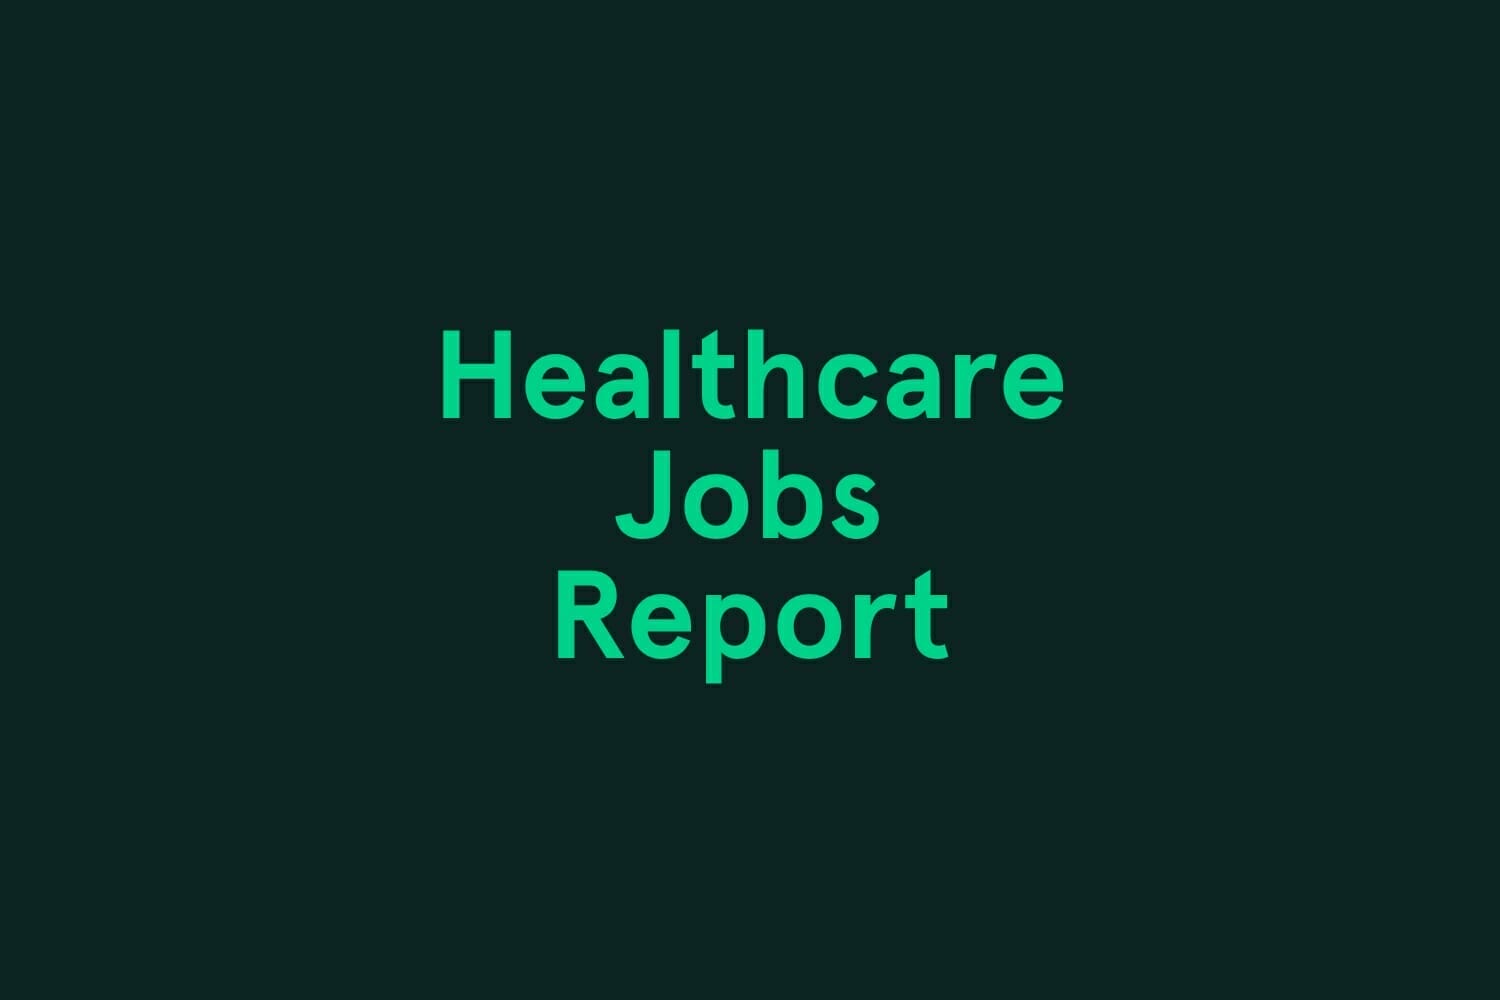 November Healthcare Jobs Report Infographic